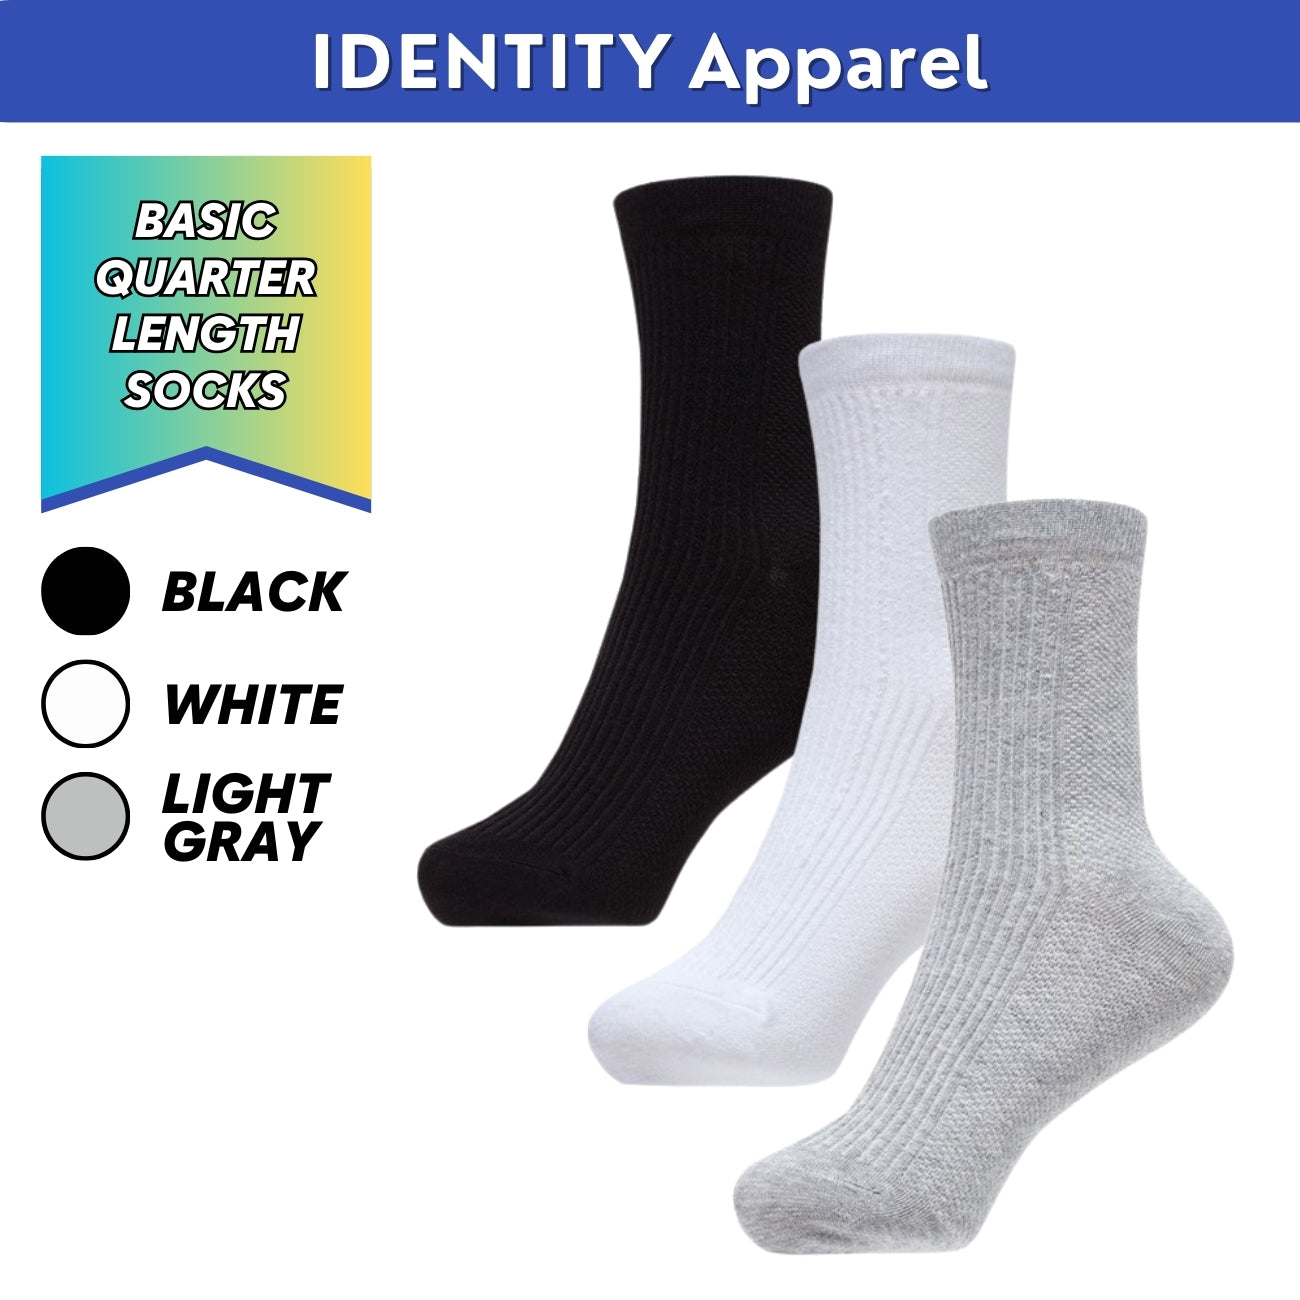 Basic Multifunction Quarter Length Cotton Socks - IDENTITY Apparel Shop